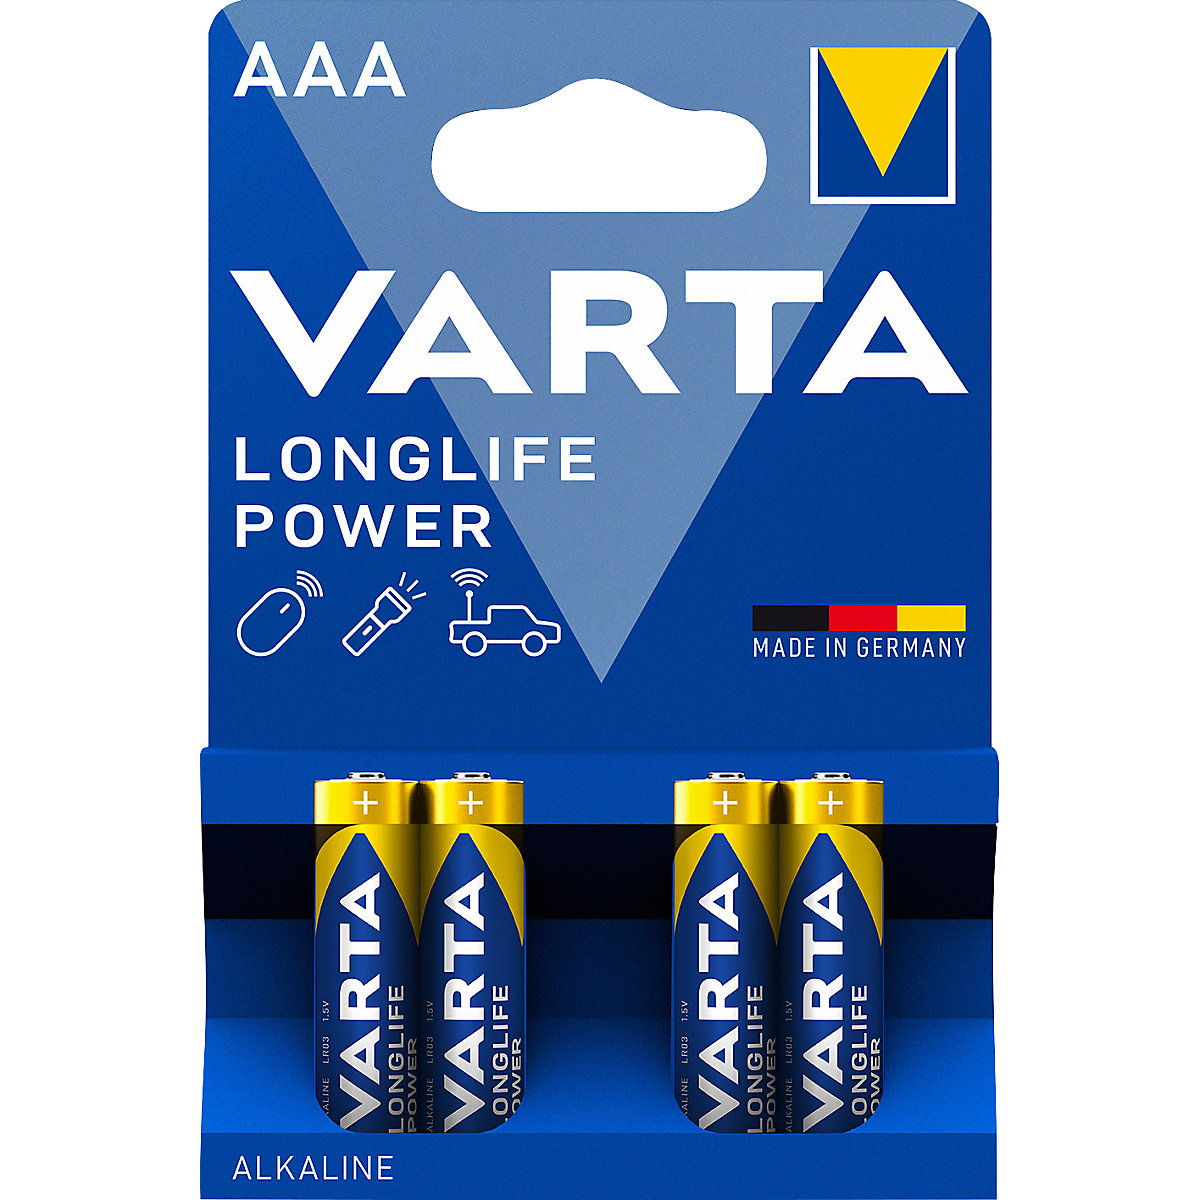 VARTA® Promotive Black - Standard extended original equipment technology.  Minimal self-discharge